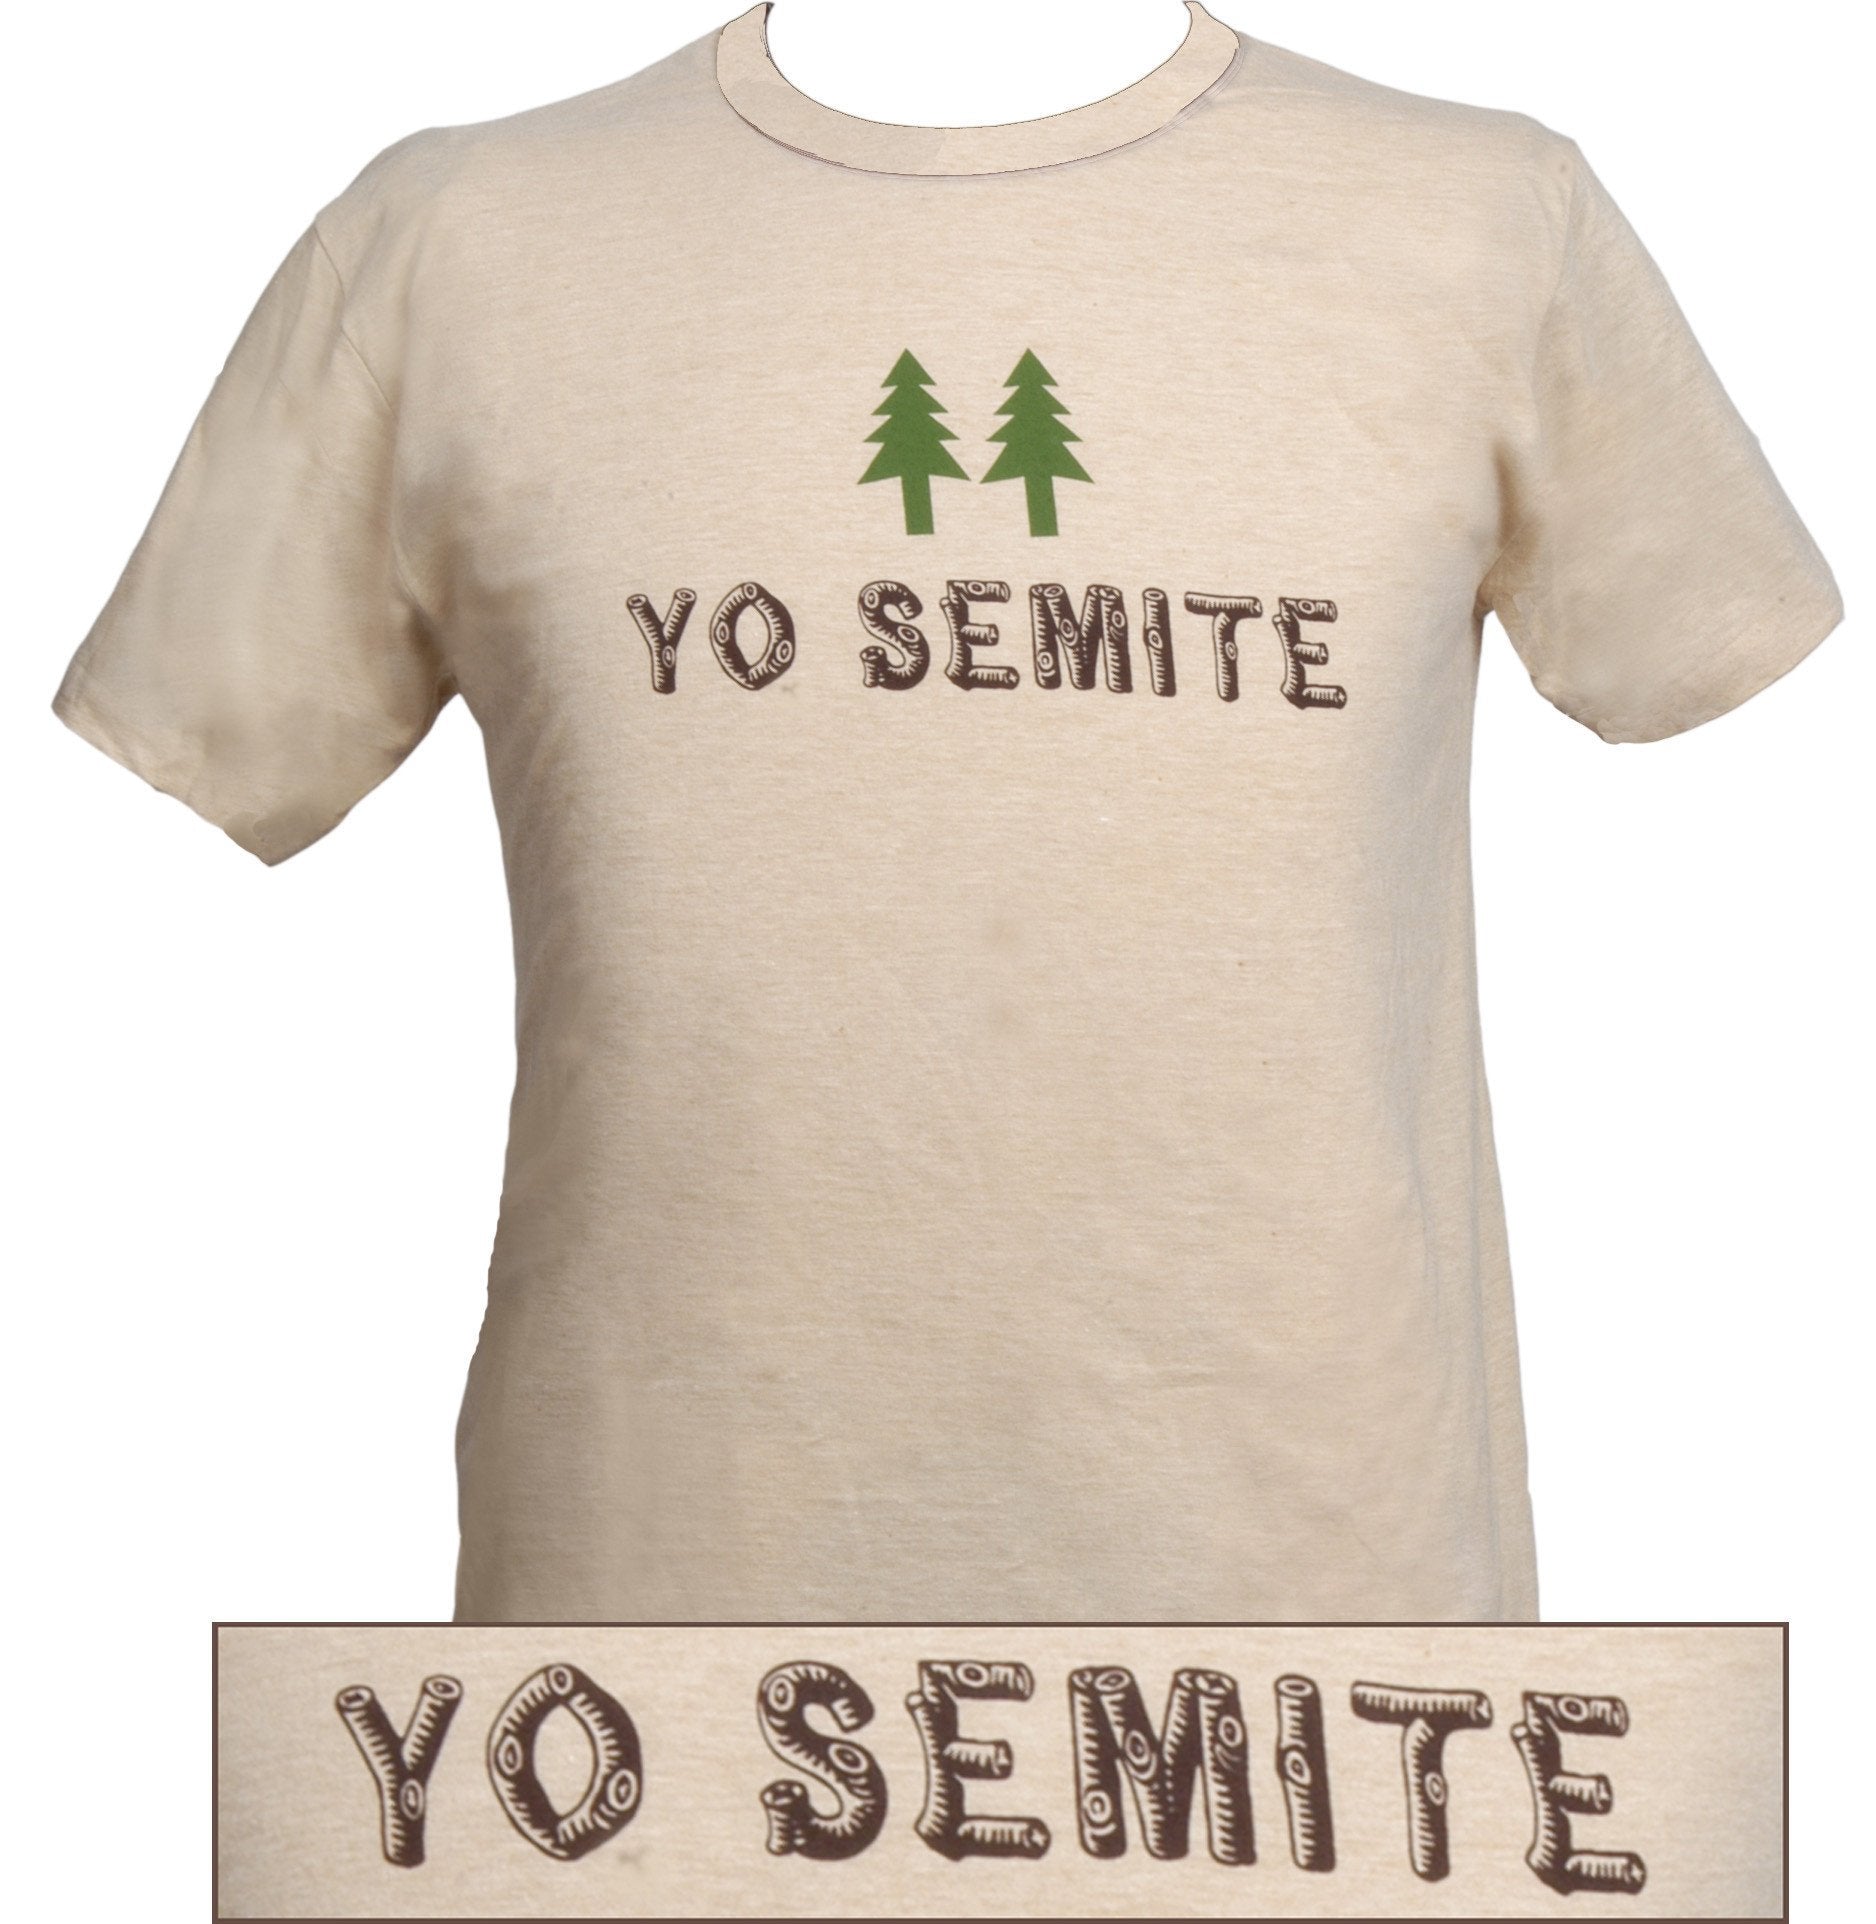 Jewish Fashion Conspiracy T-Shirt Yo Semite T-shirt